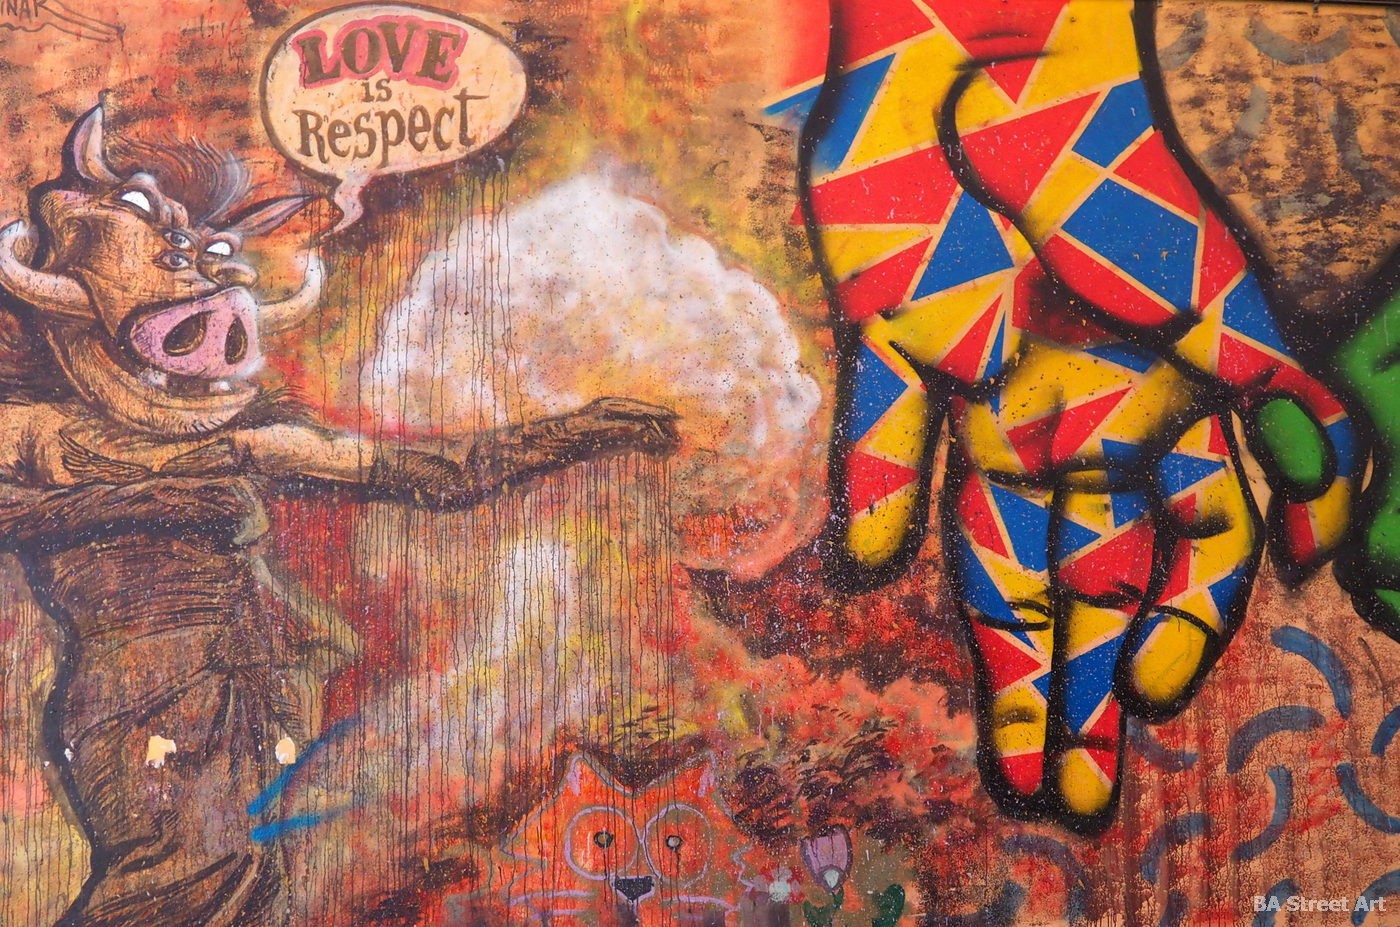 toni espinar mural valencia Cabañal-Cañamelar love is respect cabanyal 